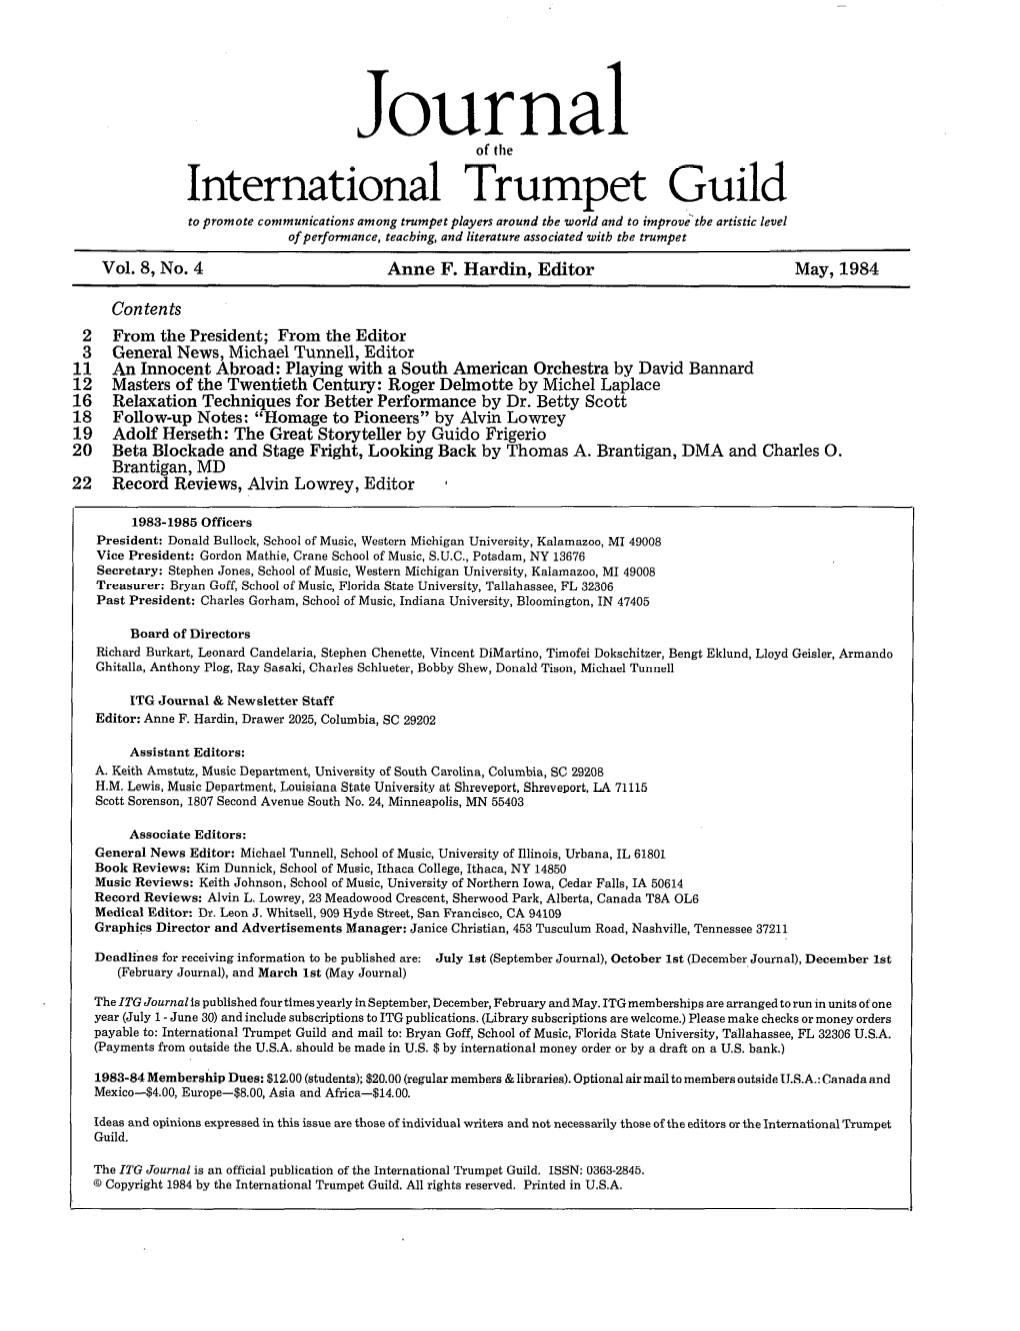 International Trumpet Guild